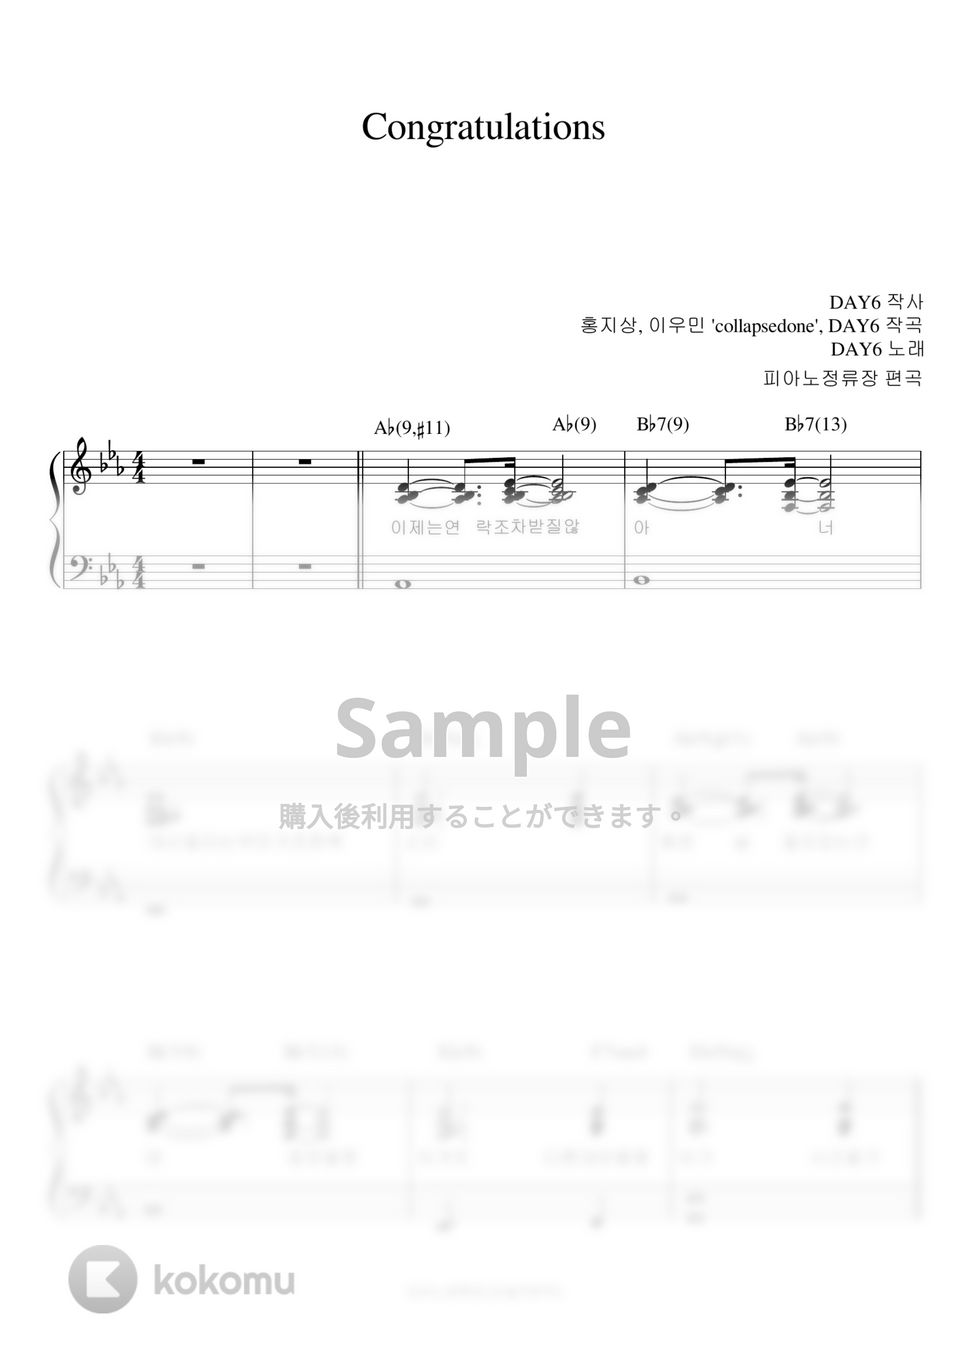 DAY6 - Congratulations (伴奏楽譜) by pianojeongryujang